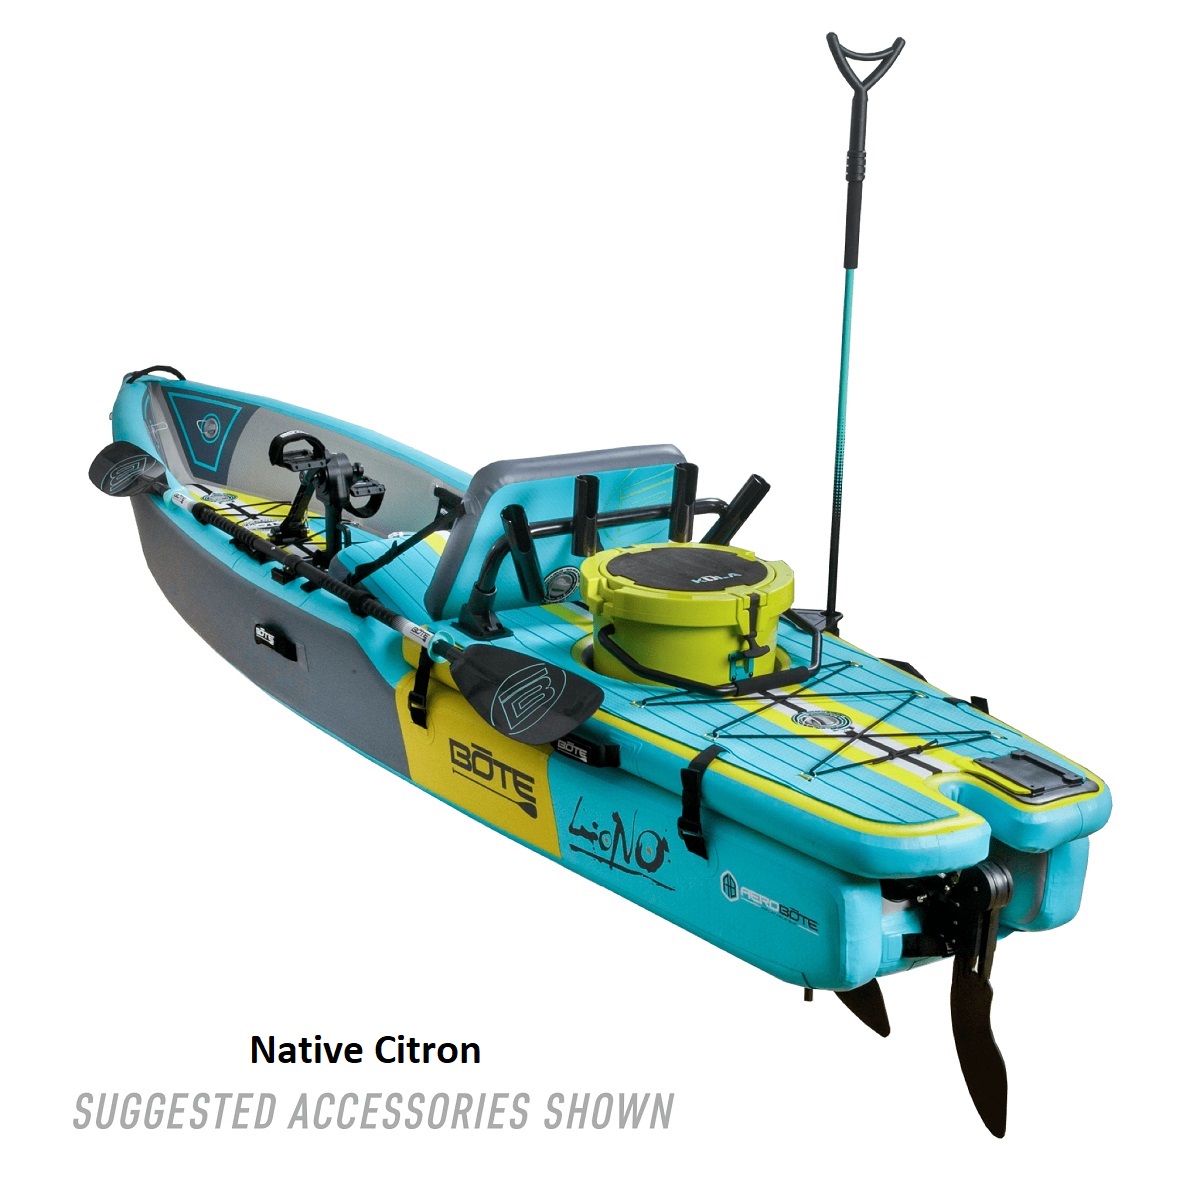 BOTE Lono Inflatable Kayak - Native Citron 2